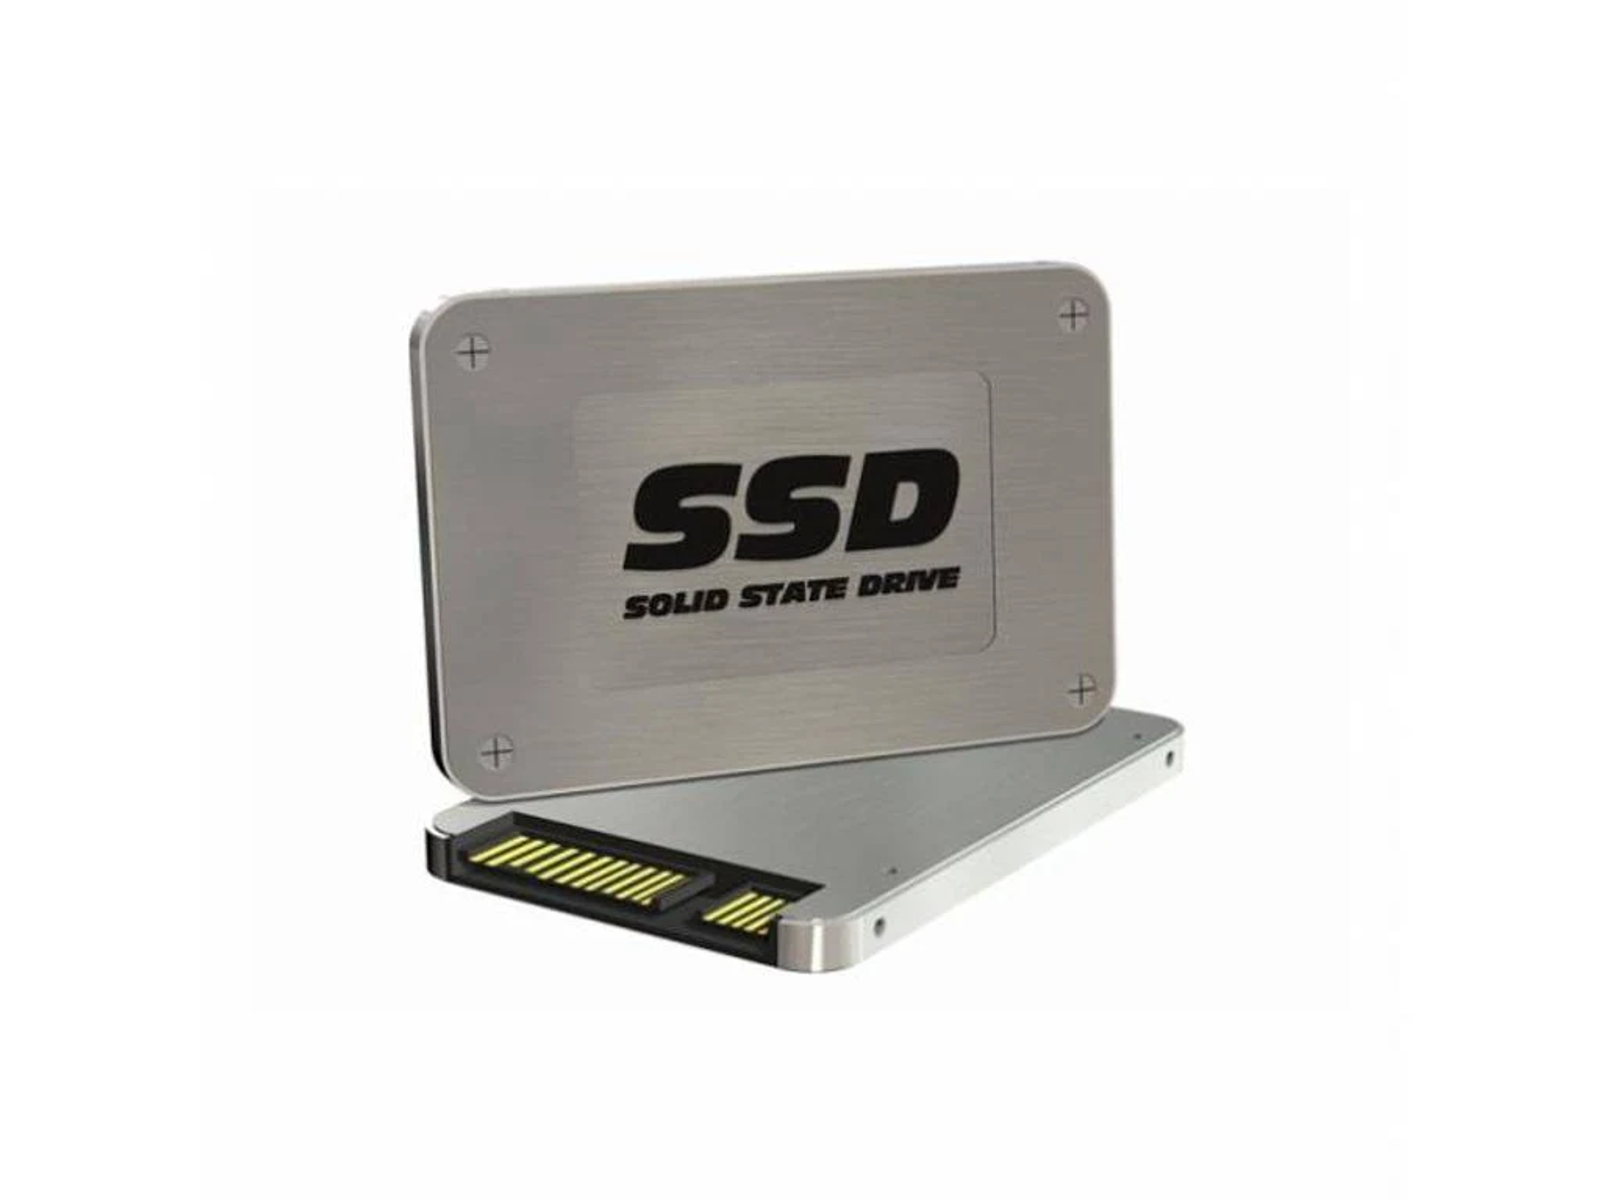 SAMSUNG intern SSD, 960 MZ7LH960HAJR-00005, GB, 2,5 Zoll,